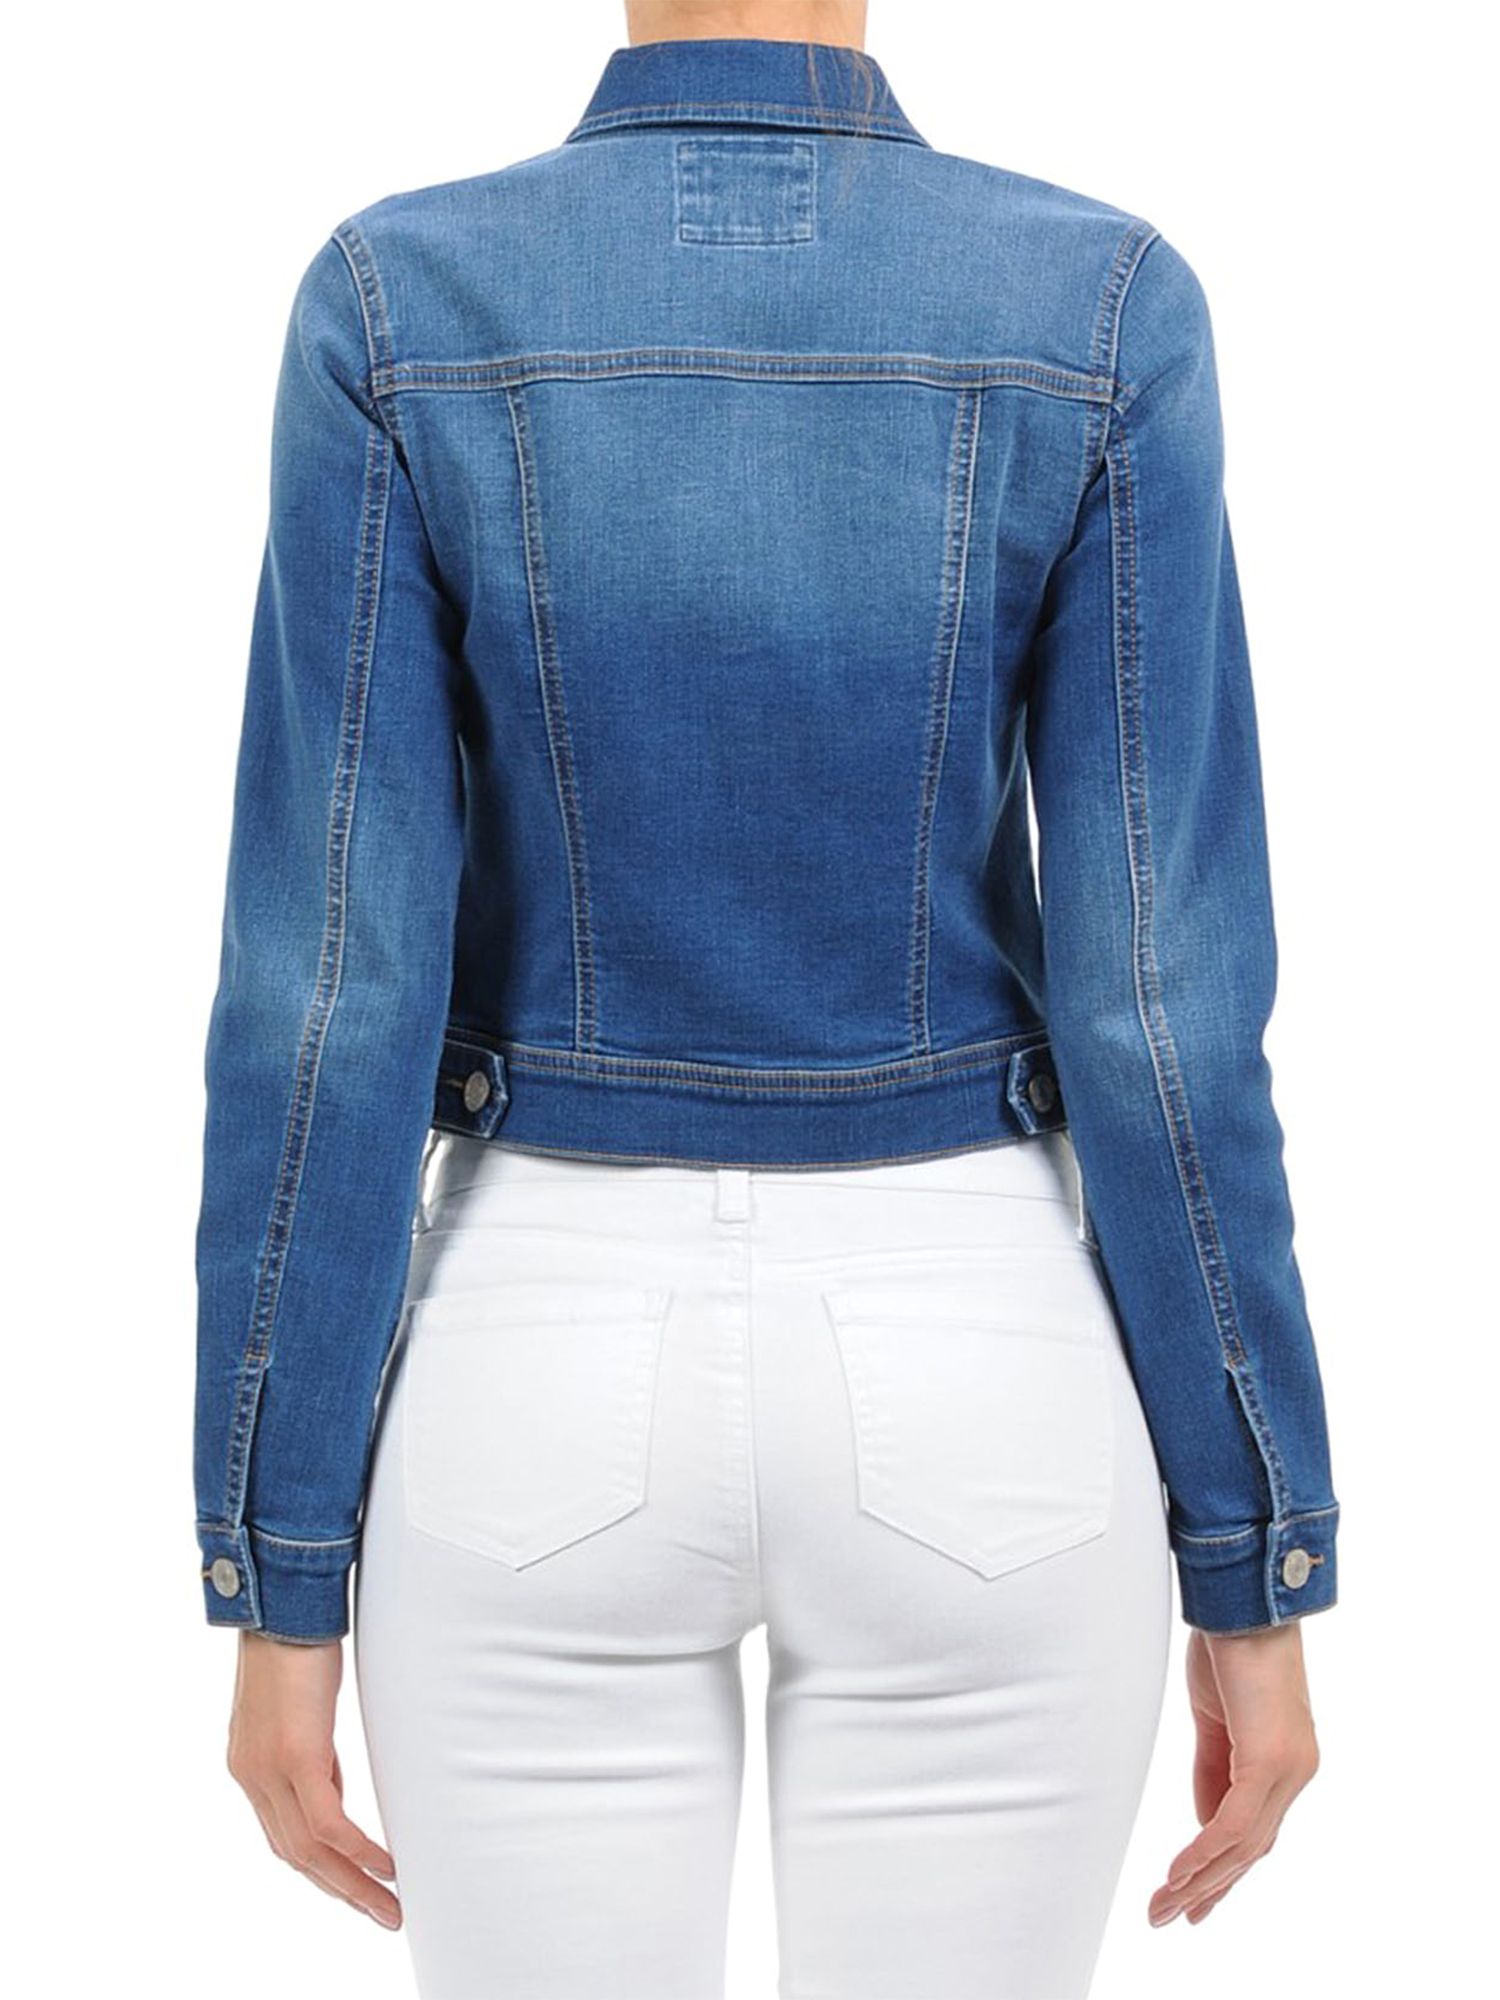 FashionMille Regular Slim Fit Washed Denim Women Jacket Jean Jacket - image 5 of 5